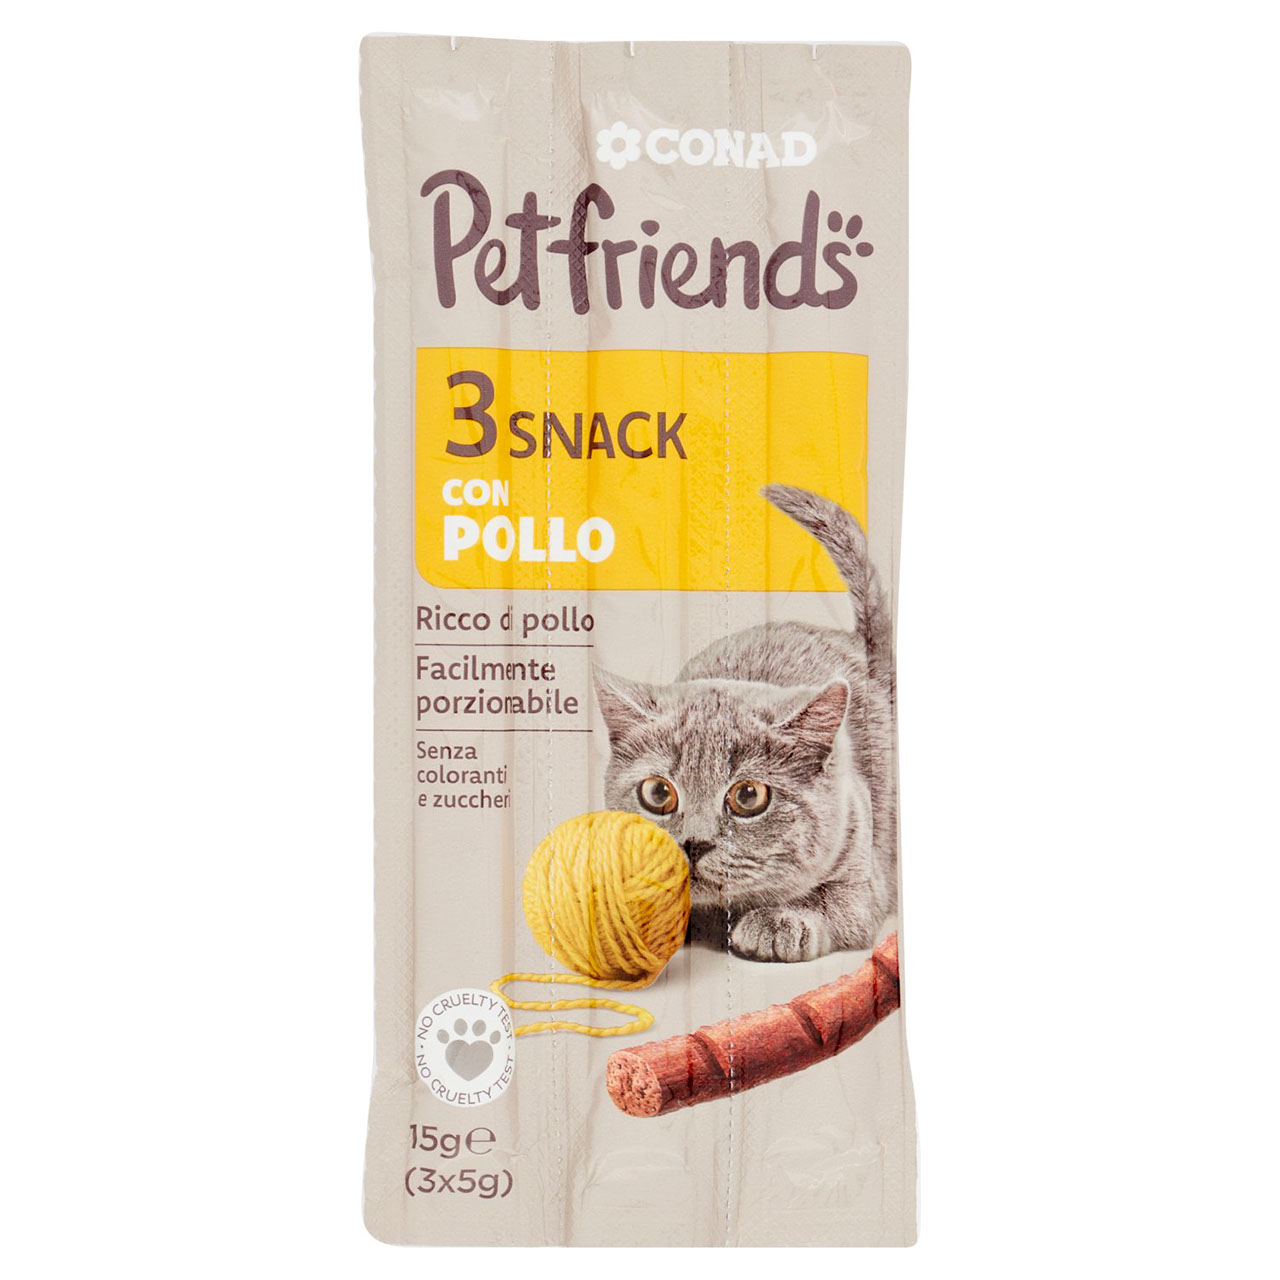 Petfriends Snack con Pollo Conad in vendita online